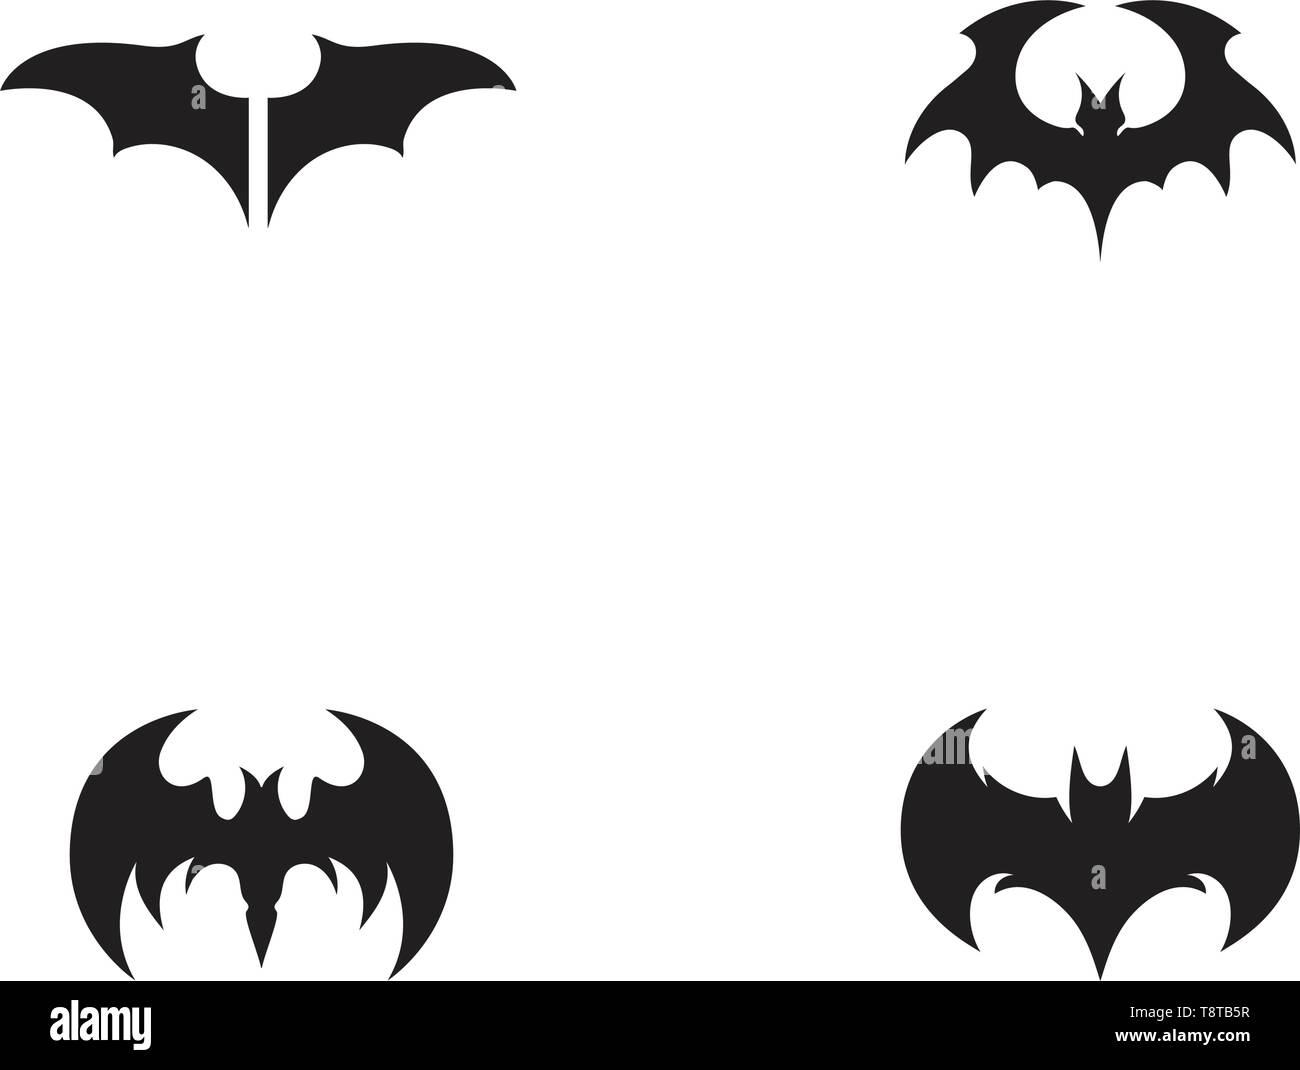 Bat wing black symbol logo Stock Vector Image & Art - Alamy